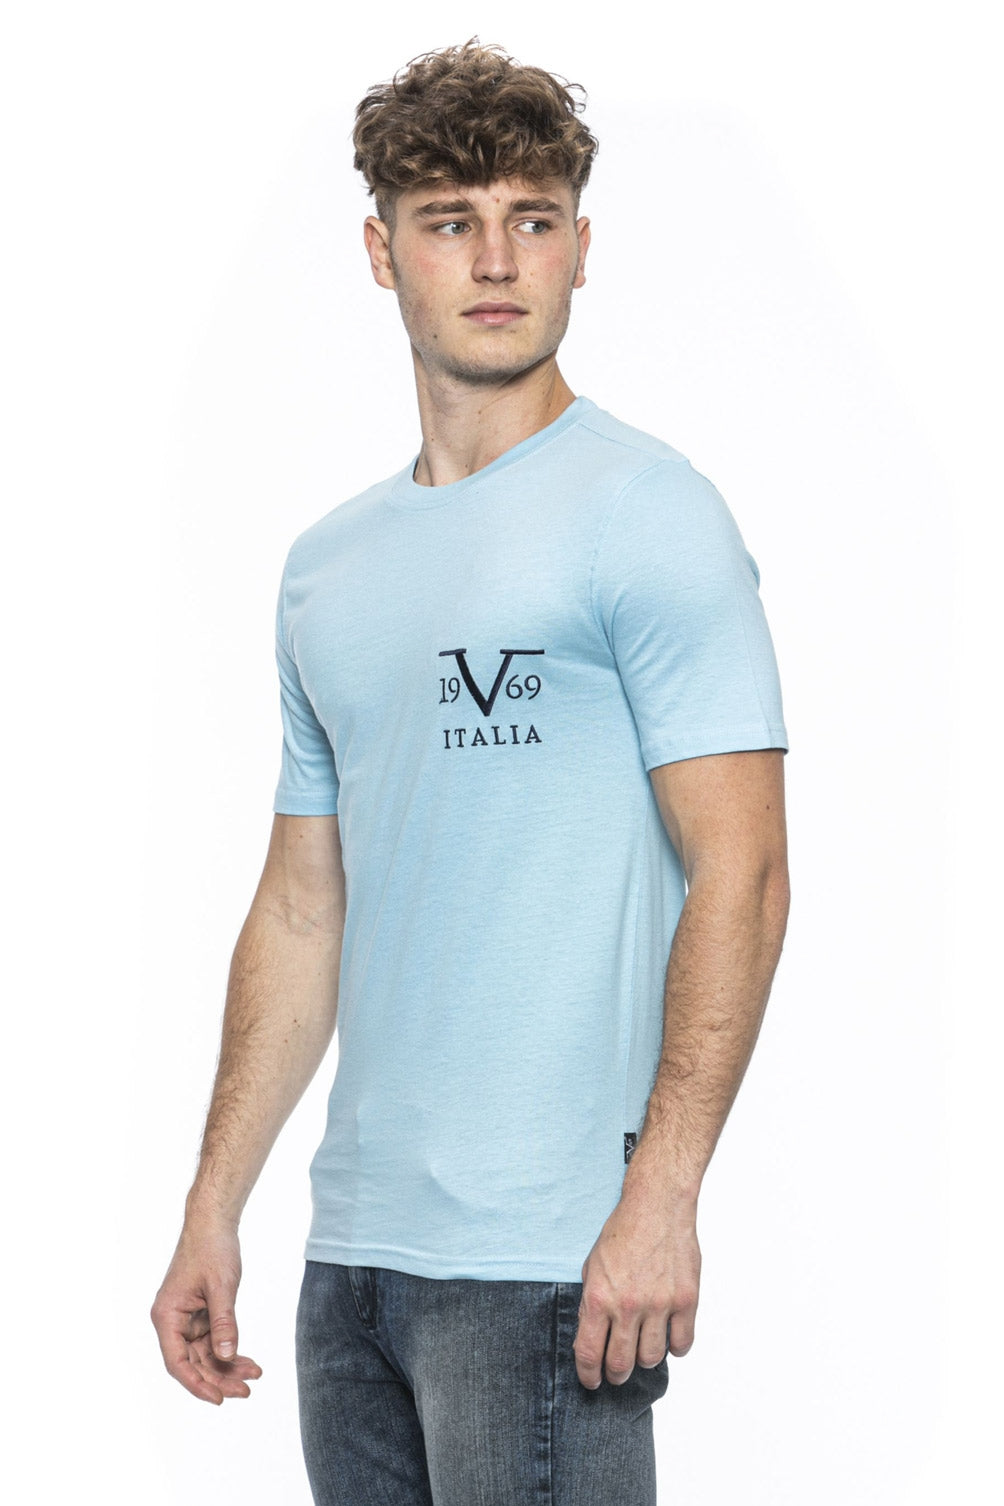 19V69 Italia Mens T-Shirt Blue TROY LIGHT BLUE